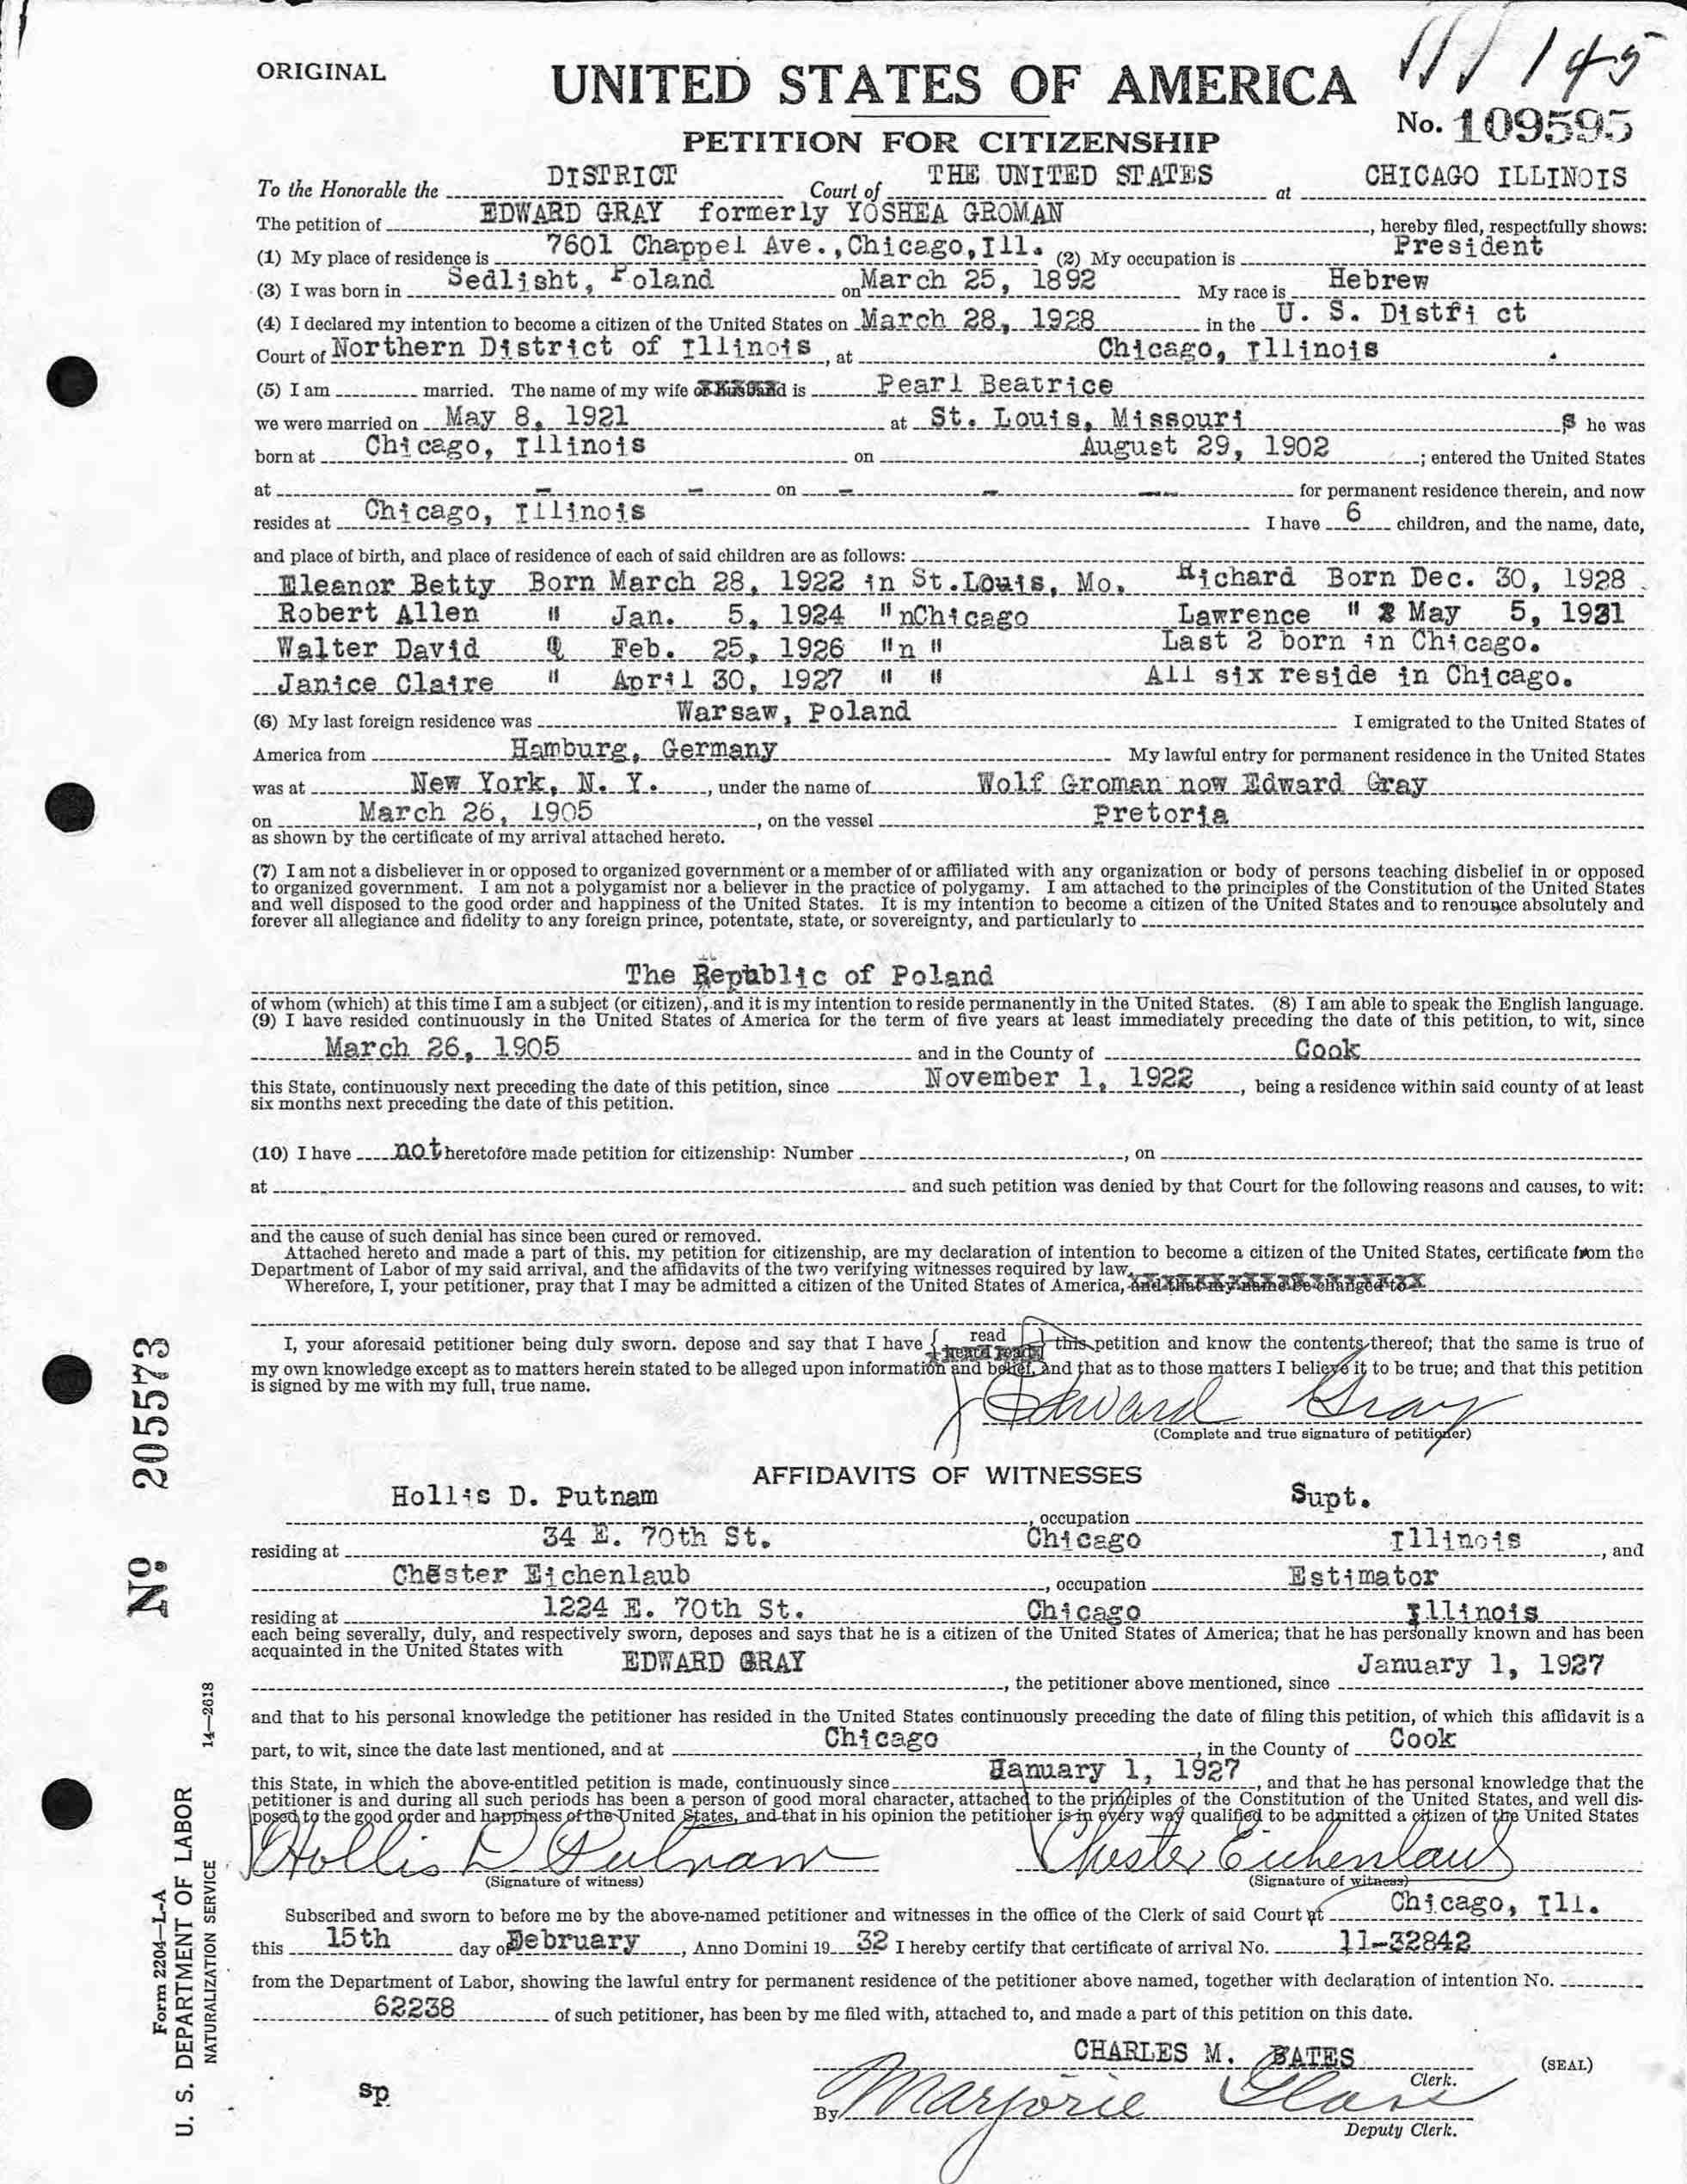 Citizenship Application 1932